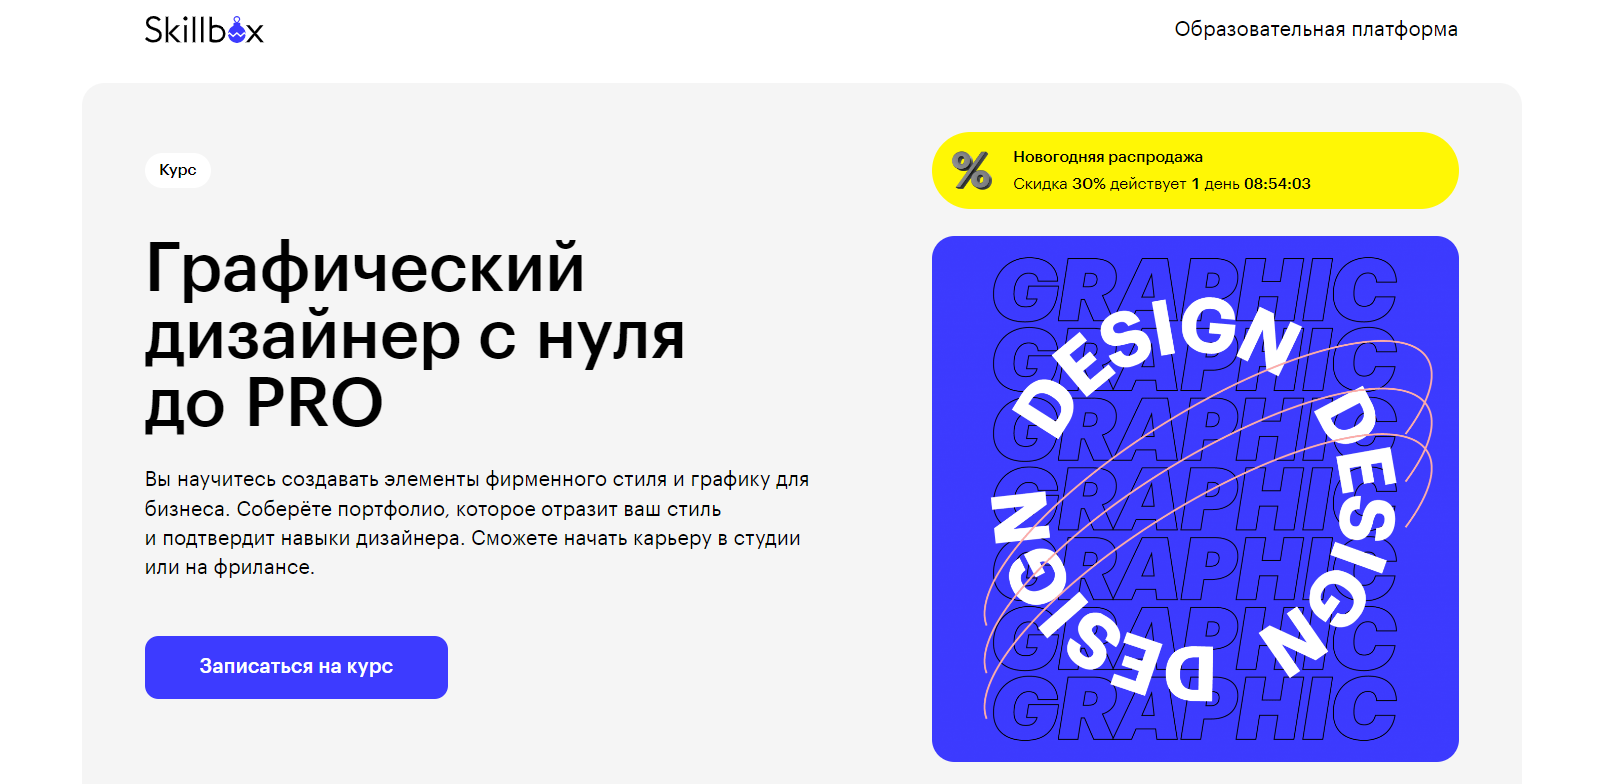 inclusive design - перевод на русский, Примеры | Glosbe